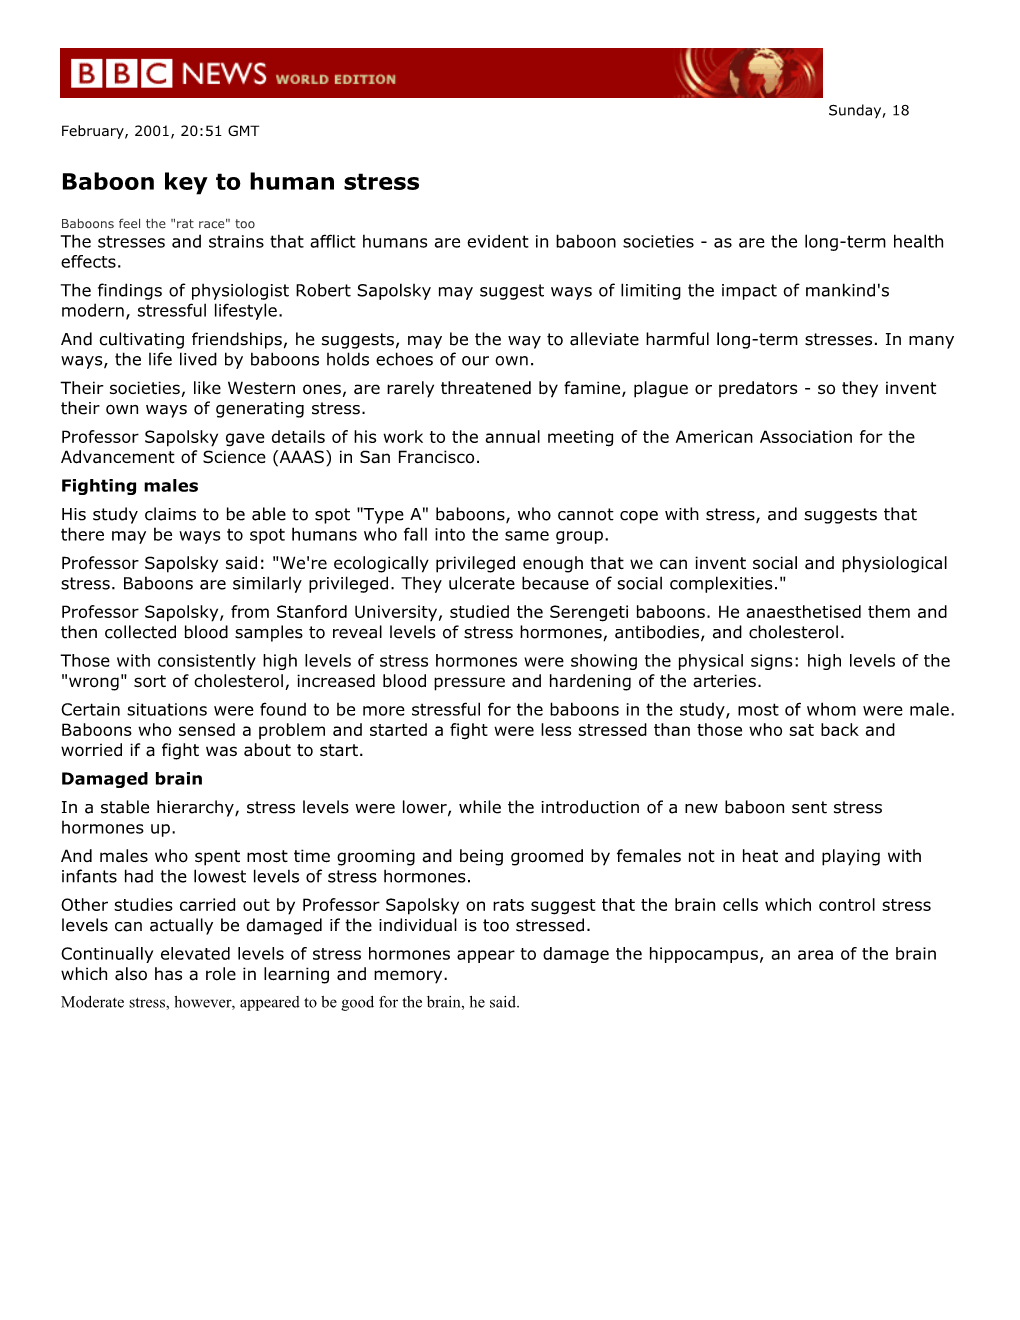 Baboon Key to Human Stress